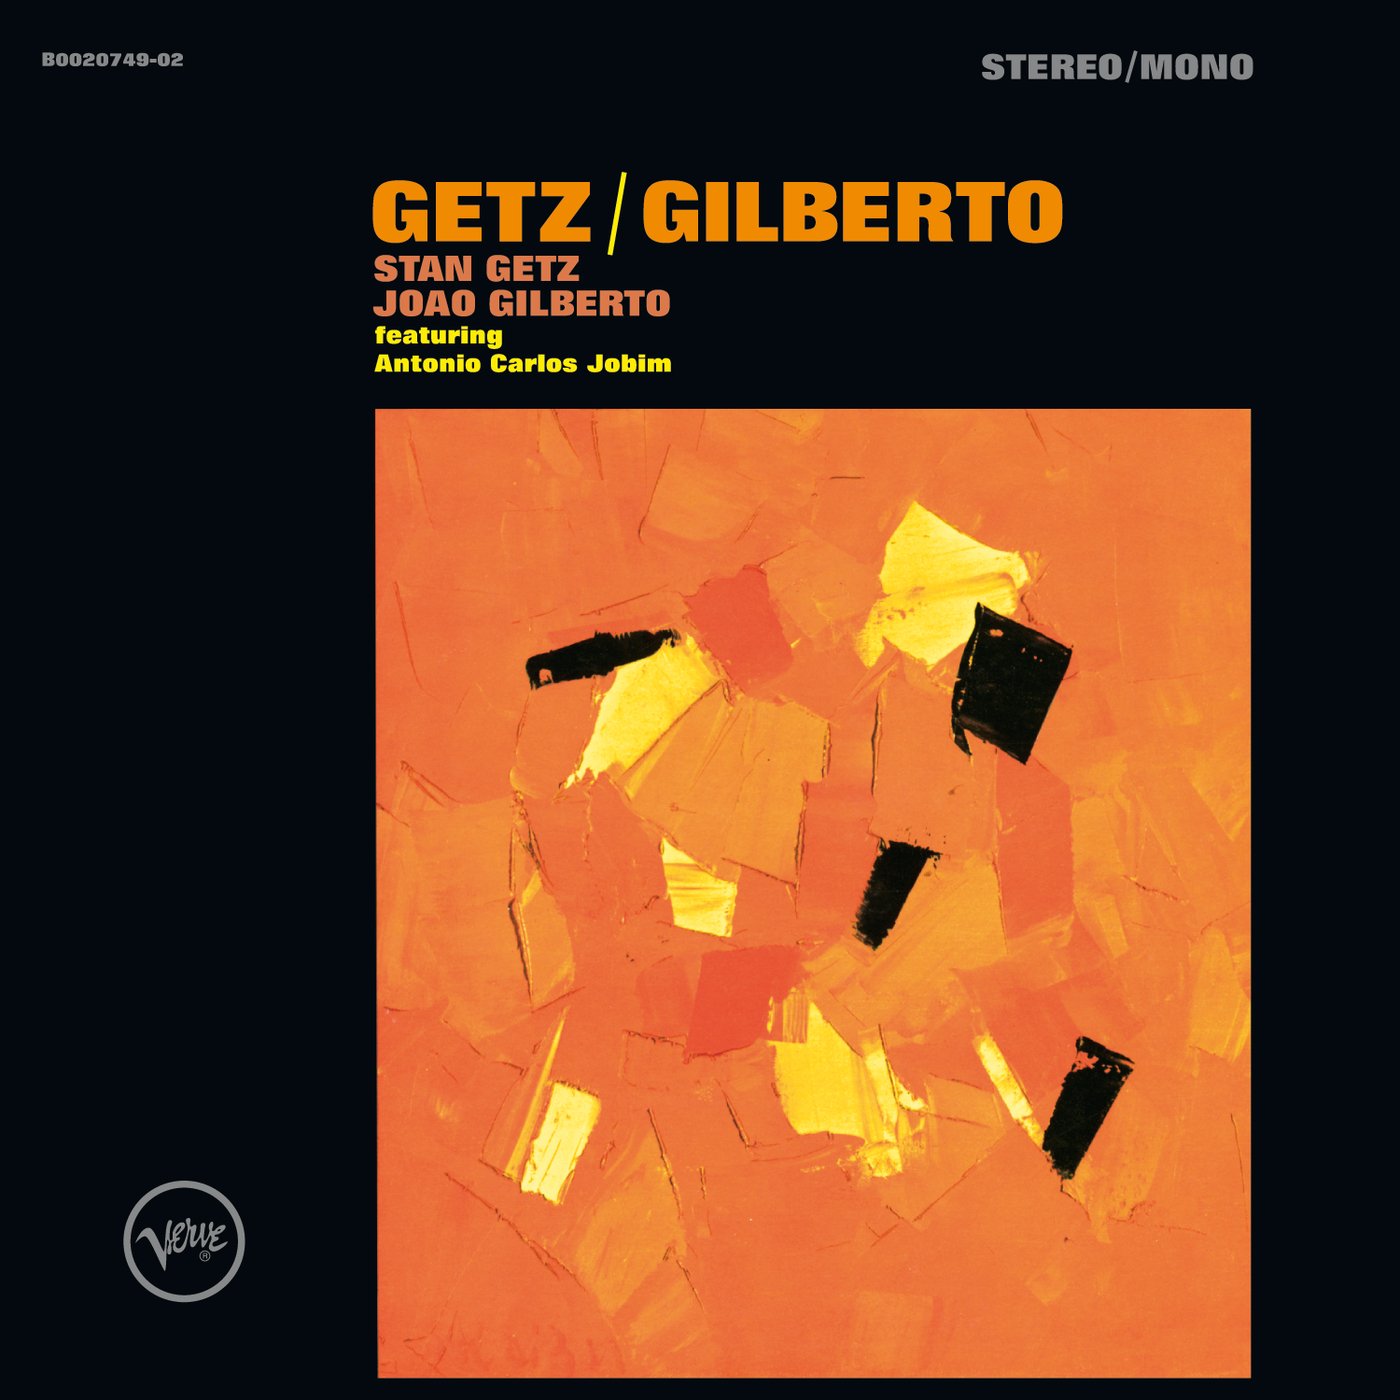 Stan Getz & Joao Giberto "Getz/Gilberto" Coloured LP